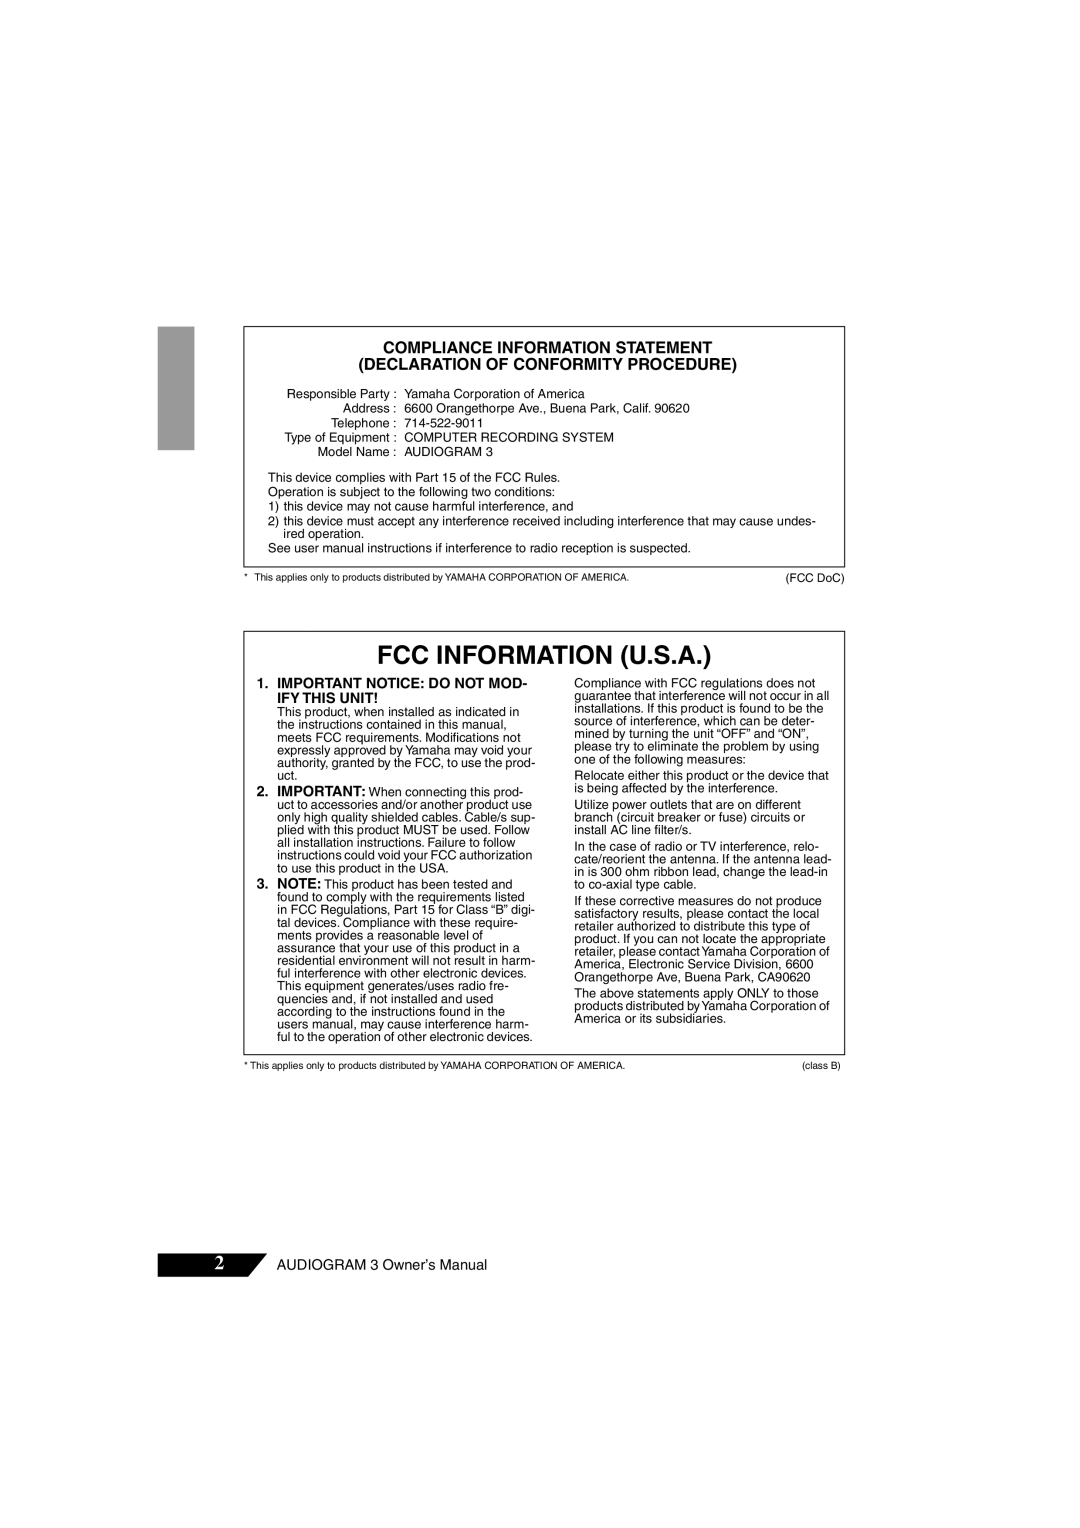 Yamaha Audiogram 3 Fcc Information U.S.A, Compliance Information Statement, Declaration Of Conformity Procedure 